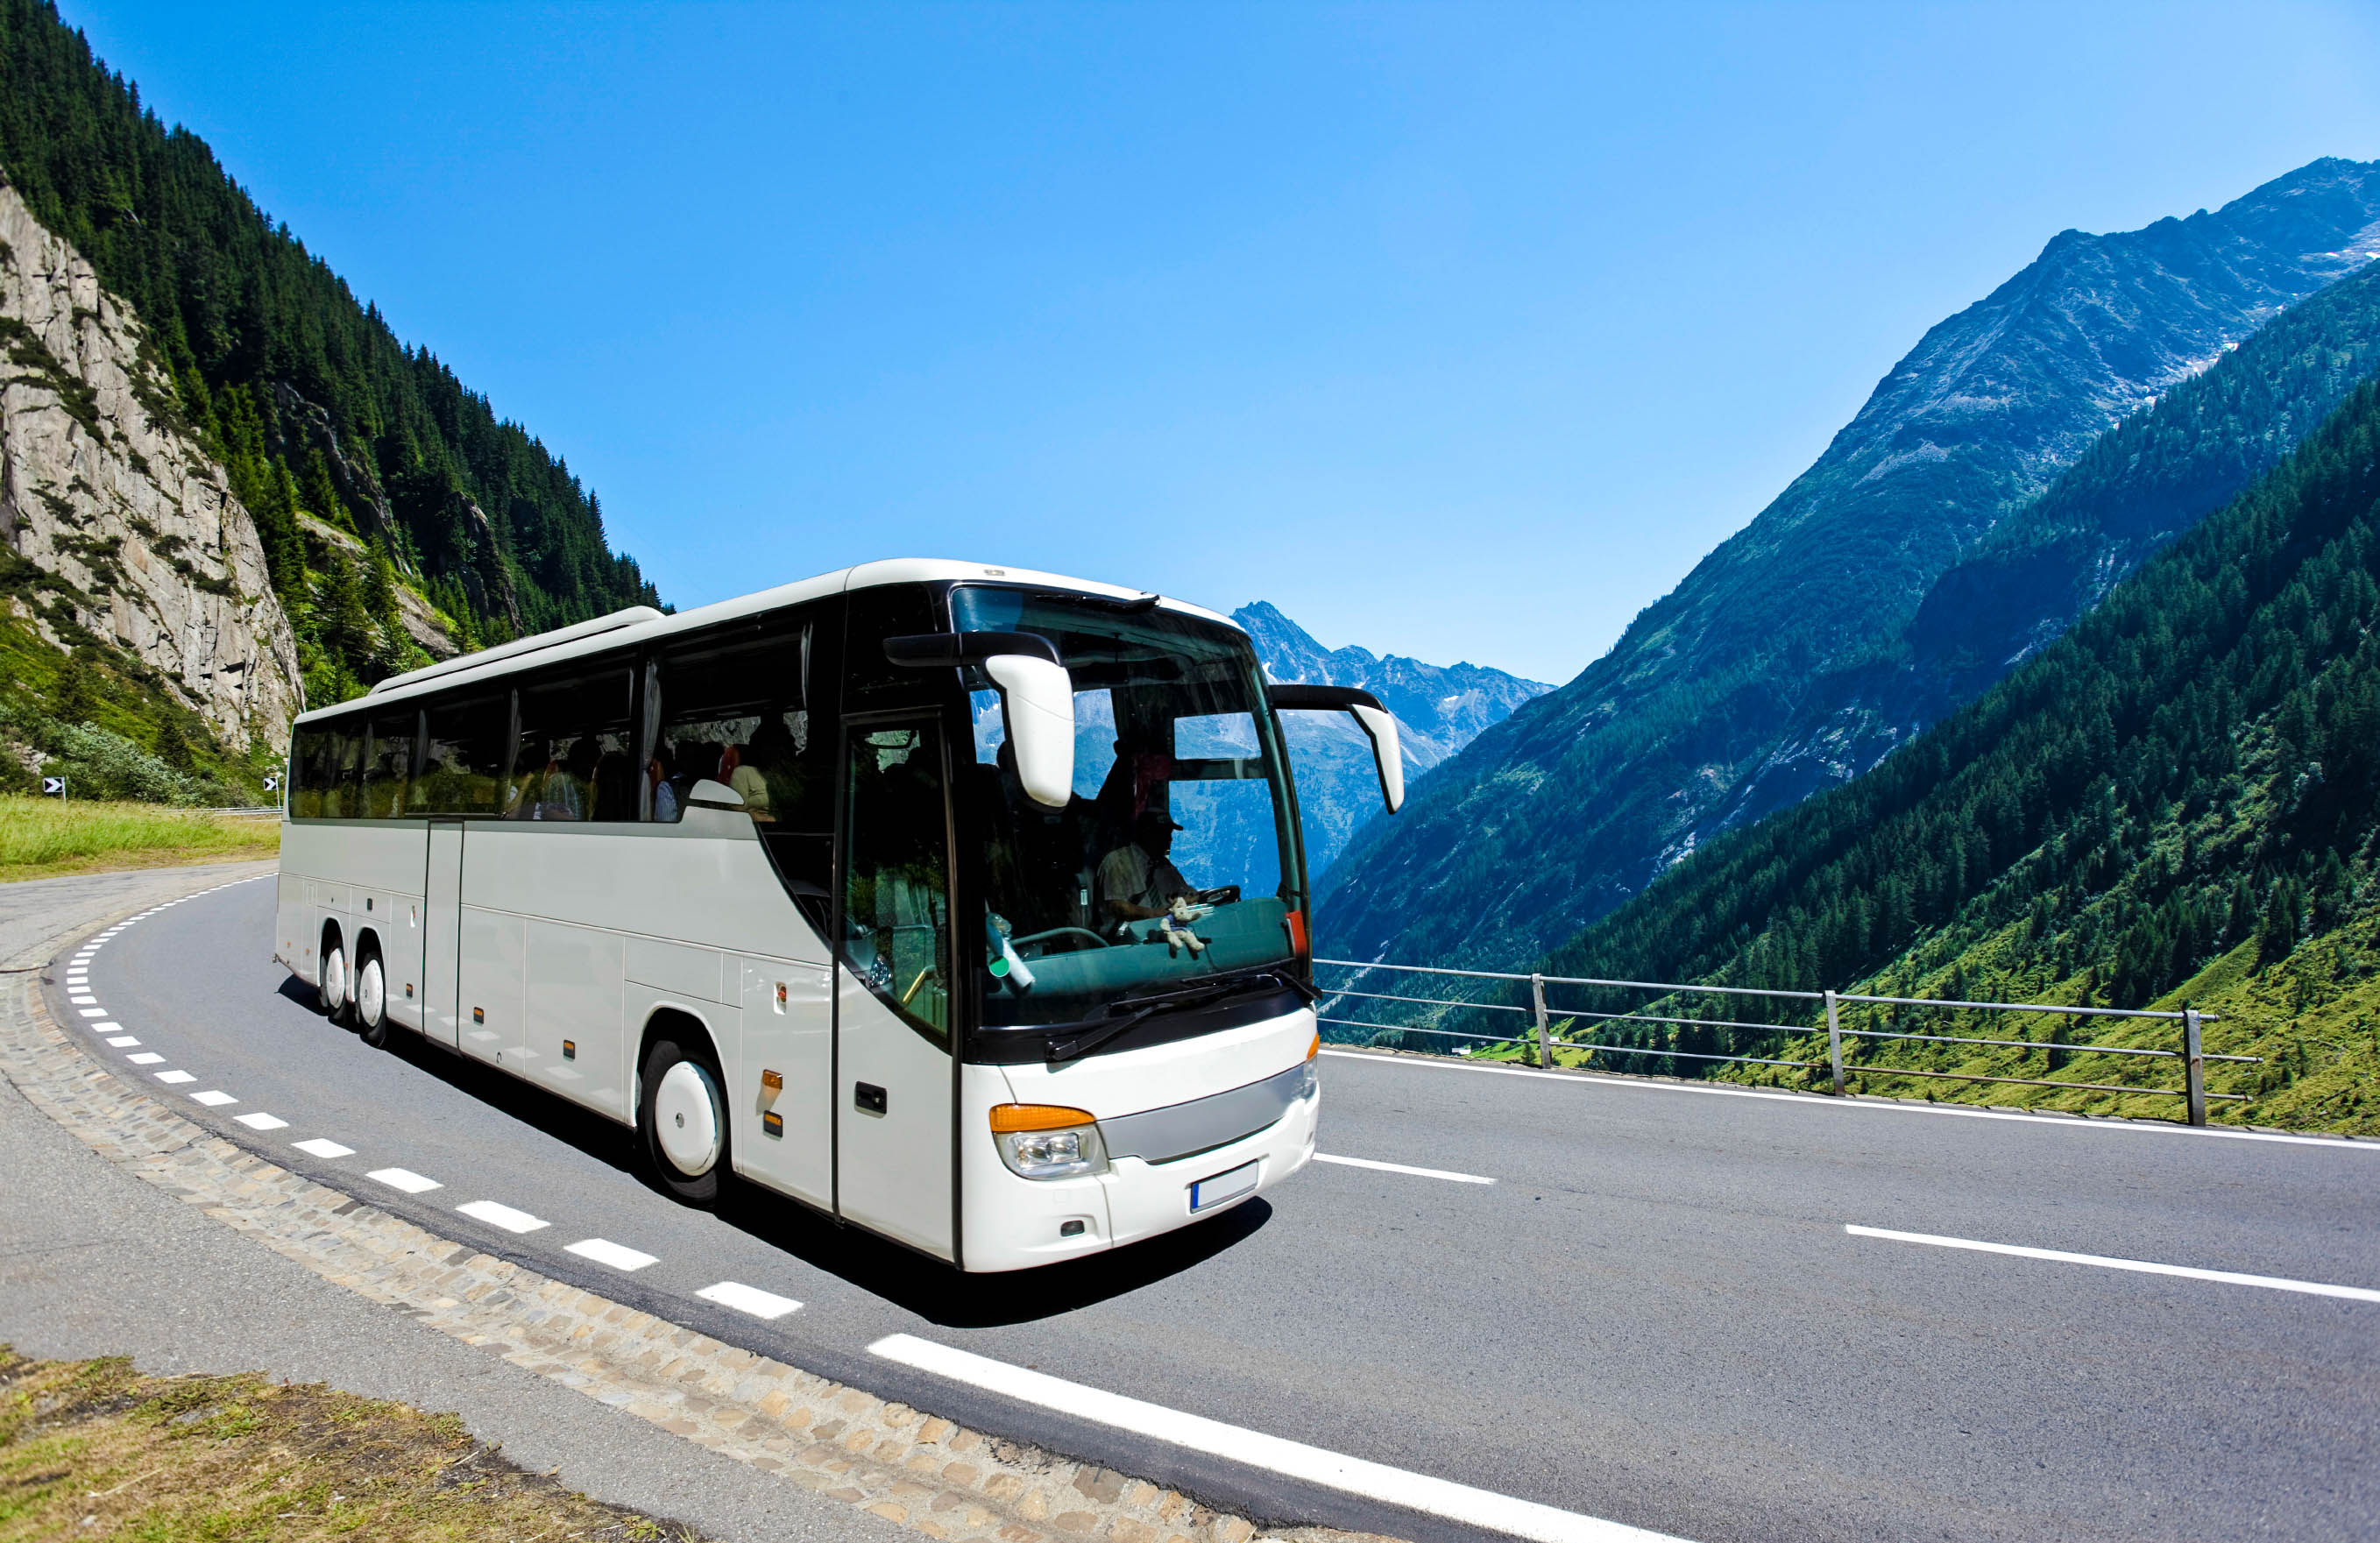 Автобусные туры на выходные. Volvo Bus 2020. Volvo 9900 Bus 2020. Экскурсионный автобус Higer. Автобус в горах.